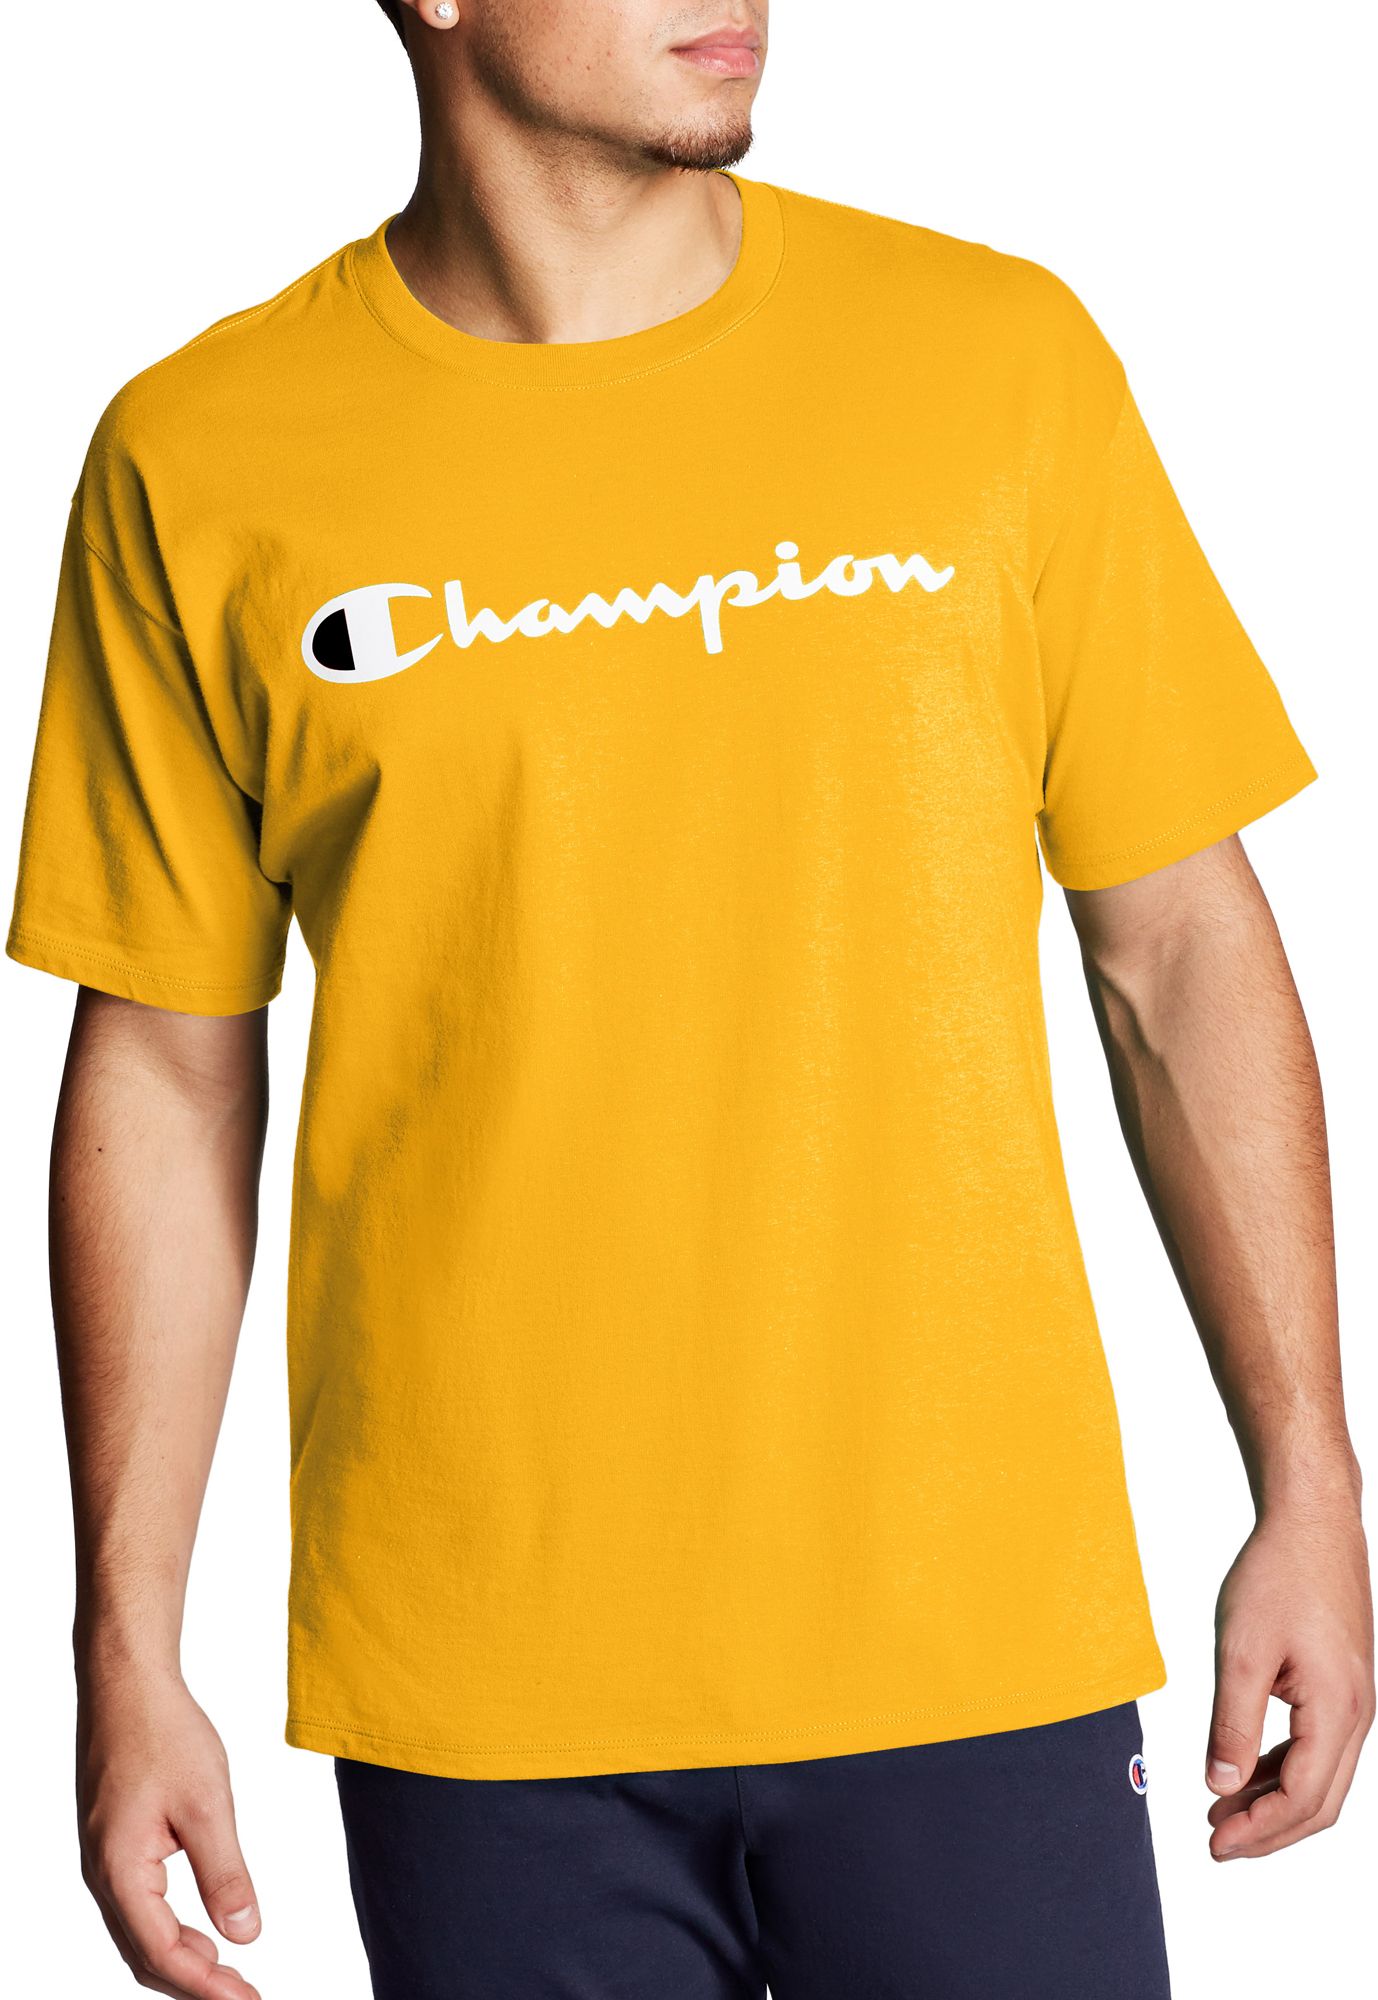 champion tee yellow